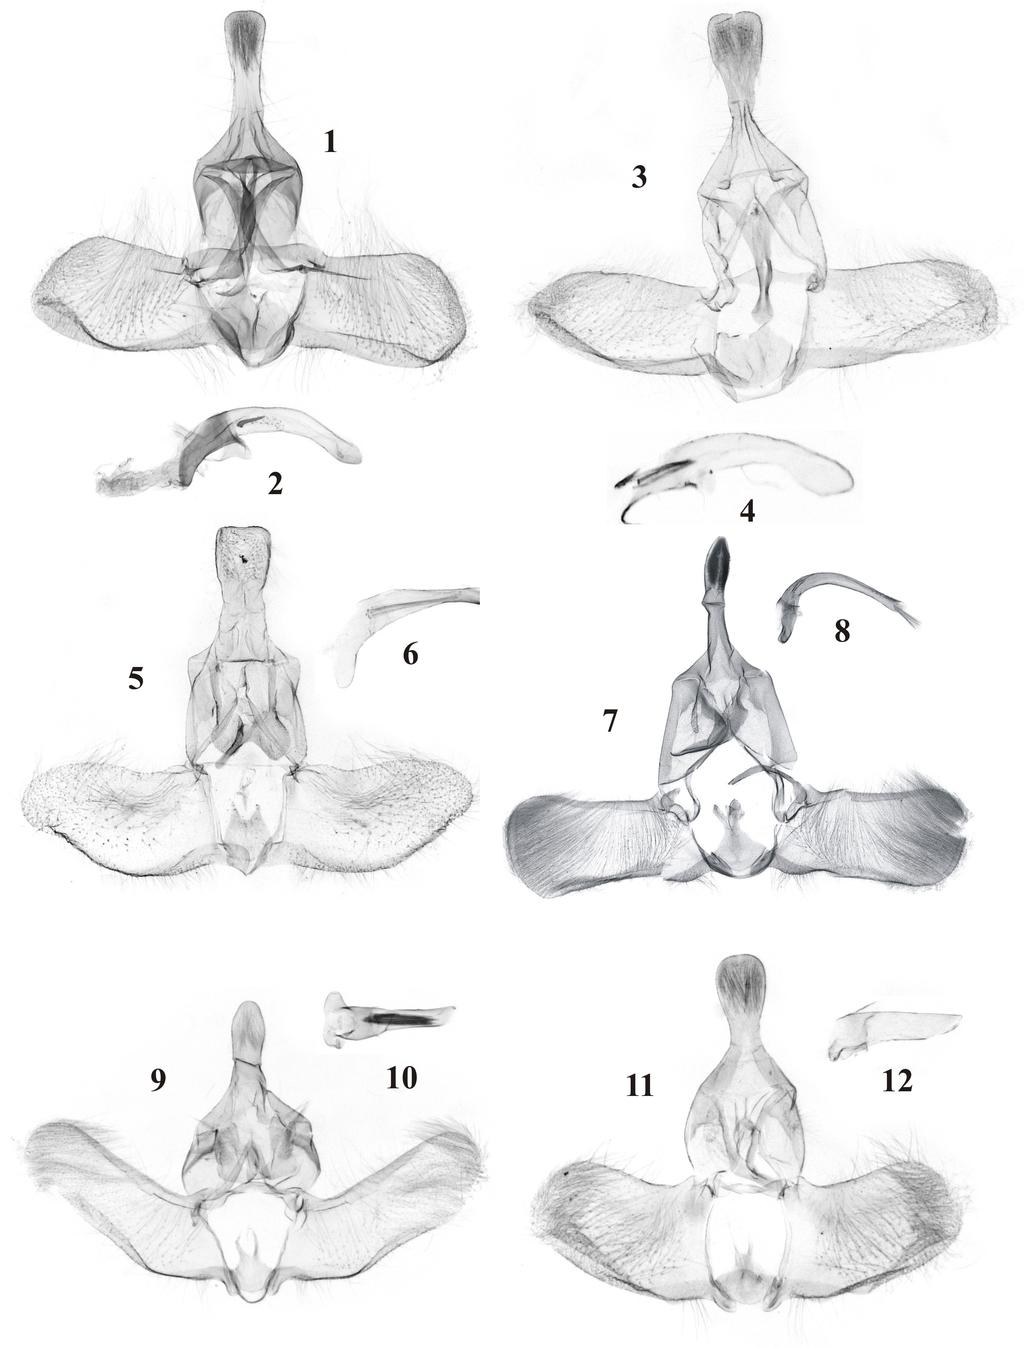 226 Polish Journal of Entomology 77 (3) Figs 1-12. Male genitalia of Gnorismoneura ISSIKI & STRINGER: 1, 2 G. chyta sp. n.